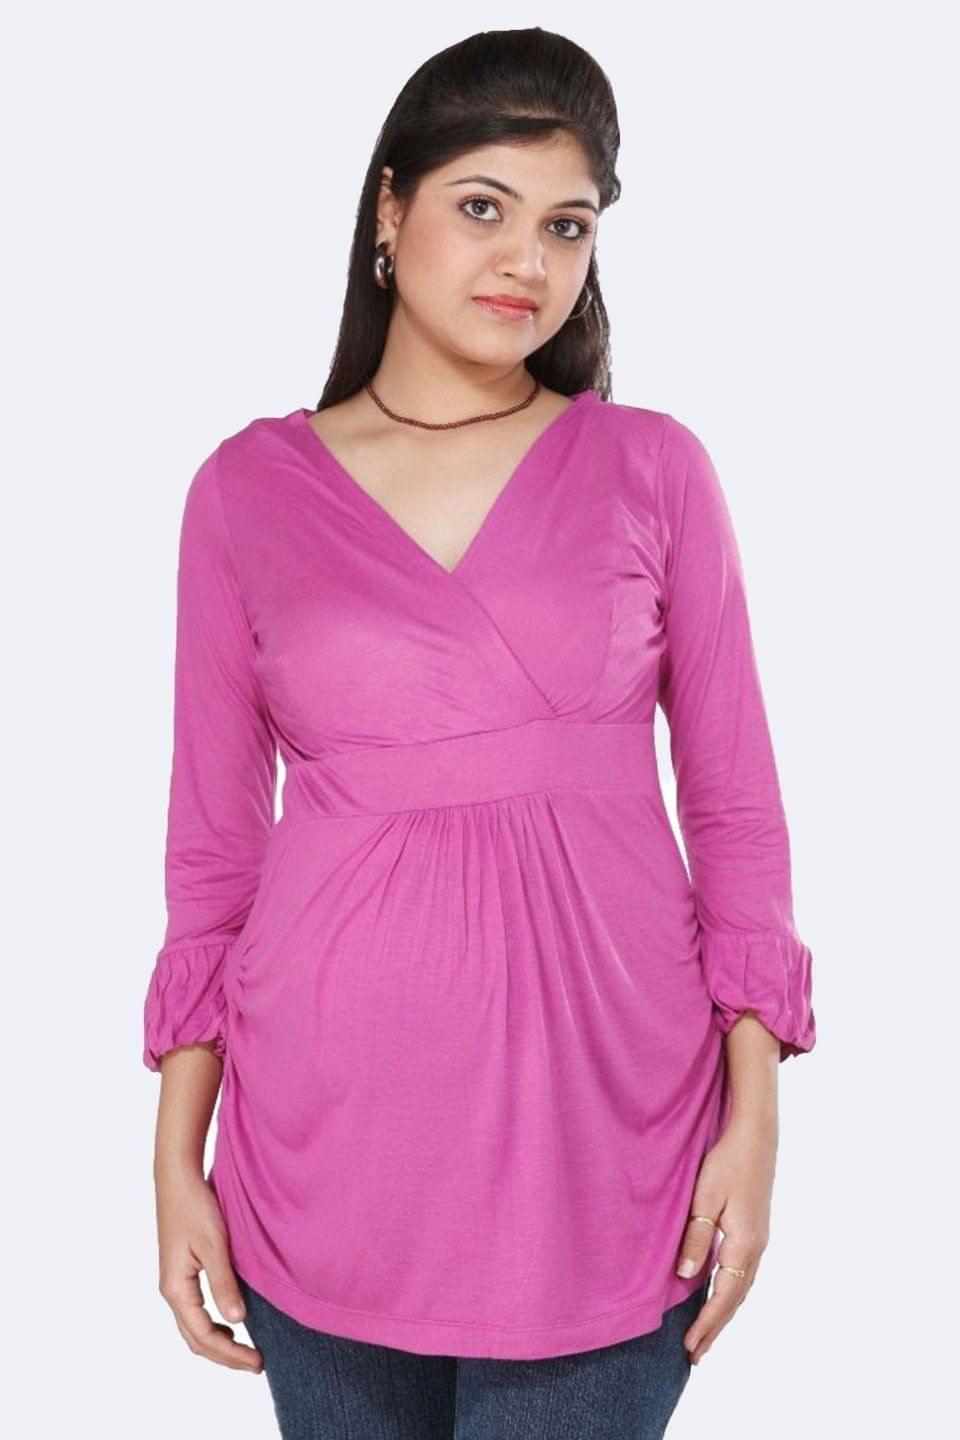 Morph Maternity Trendy Pink Evening Maternity Top